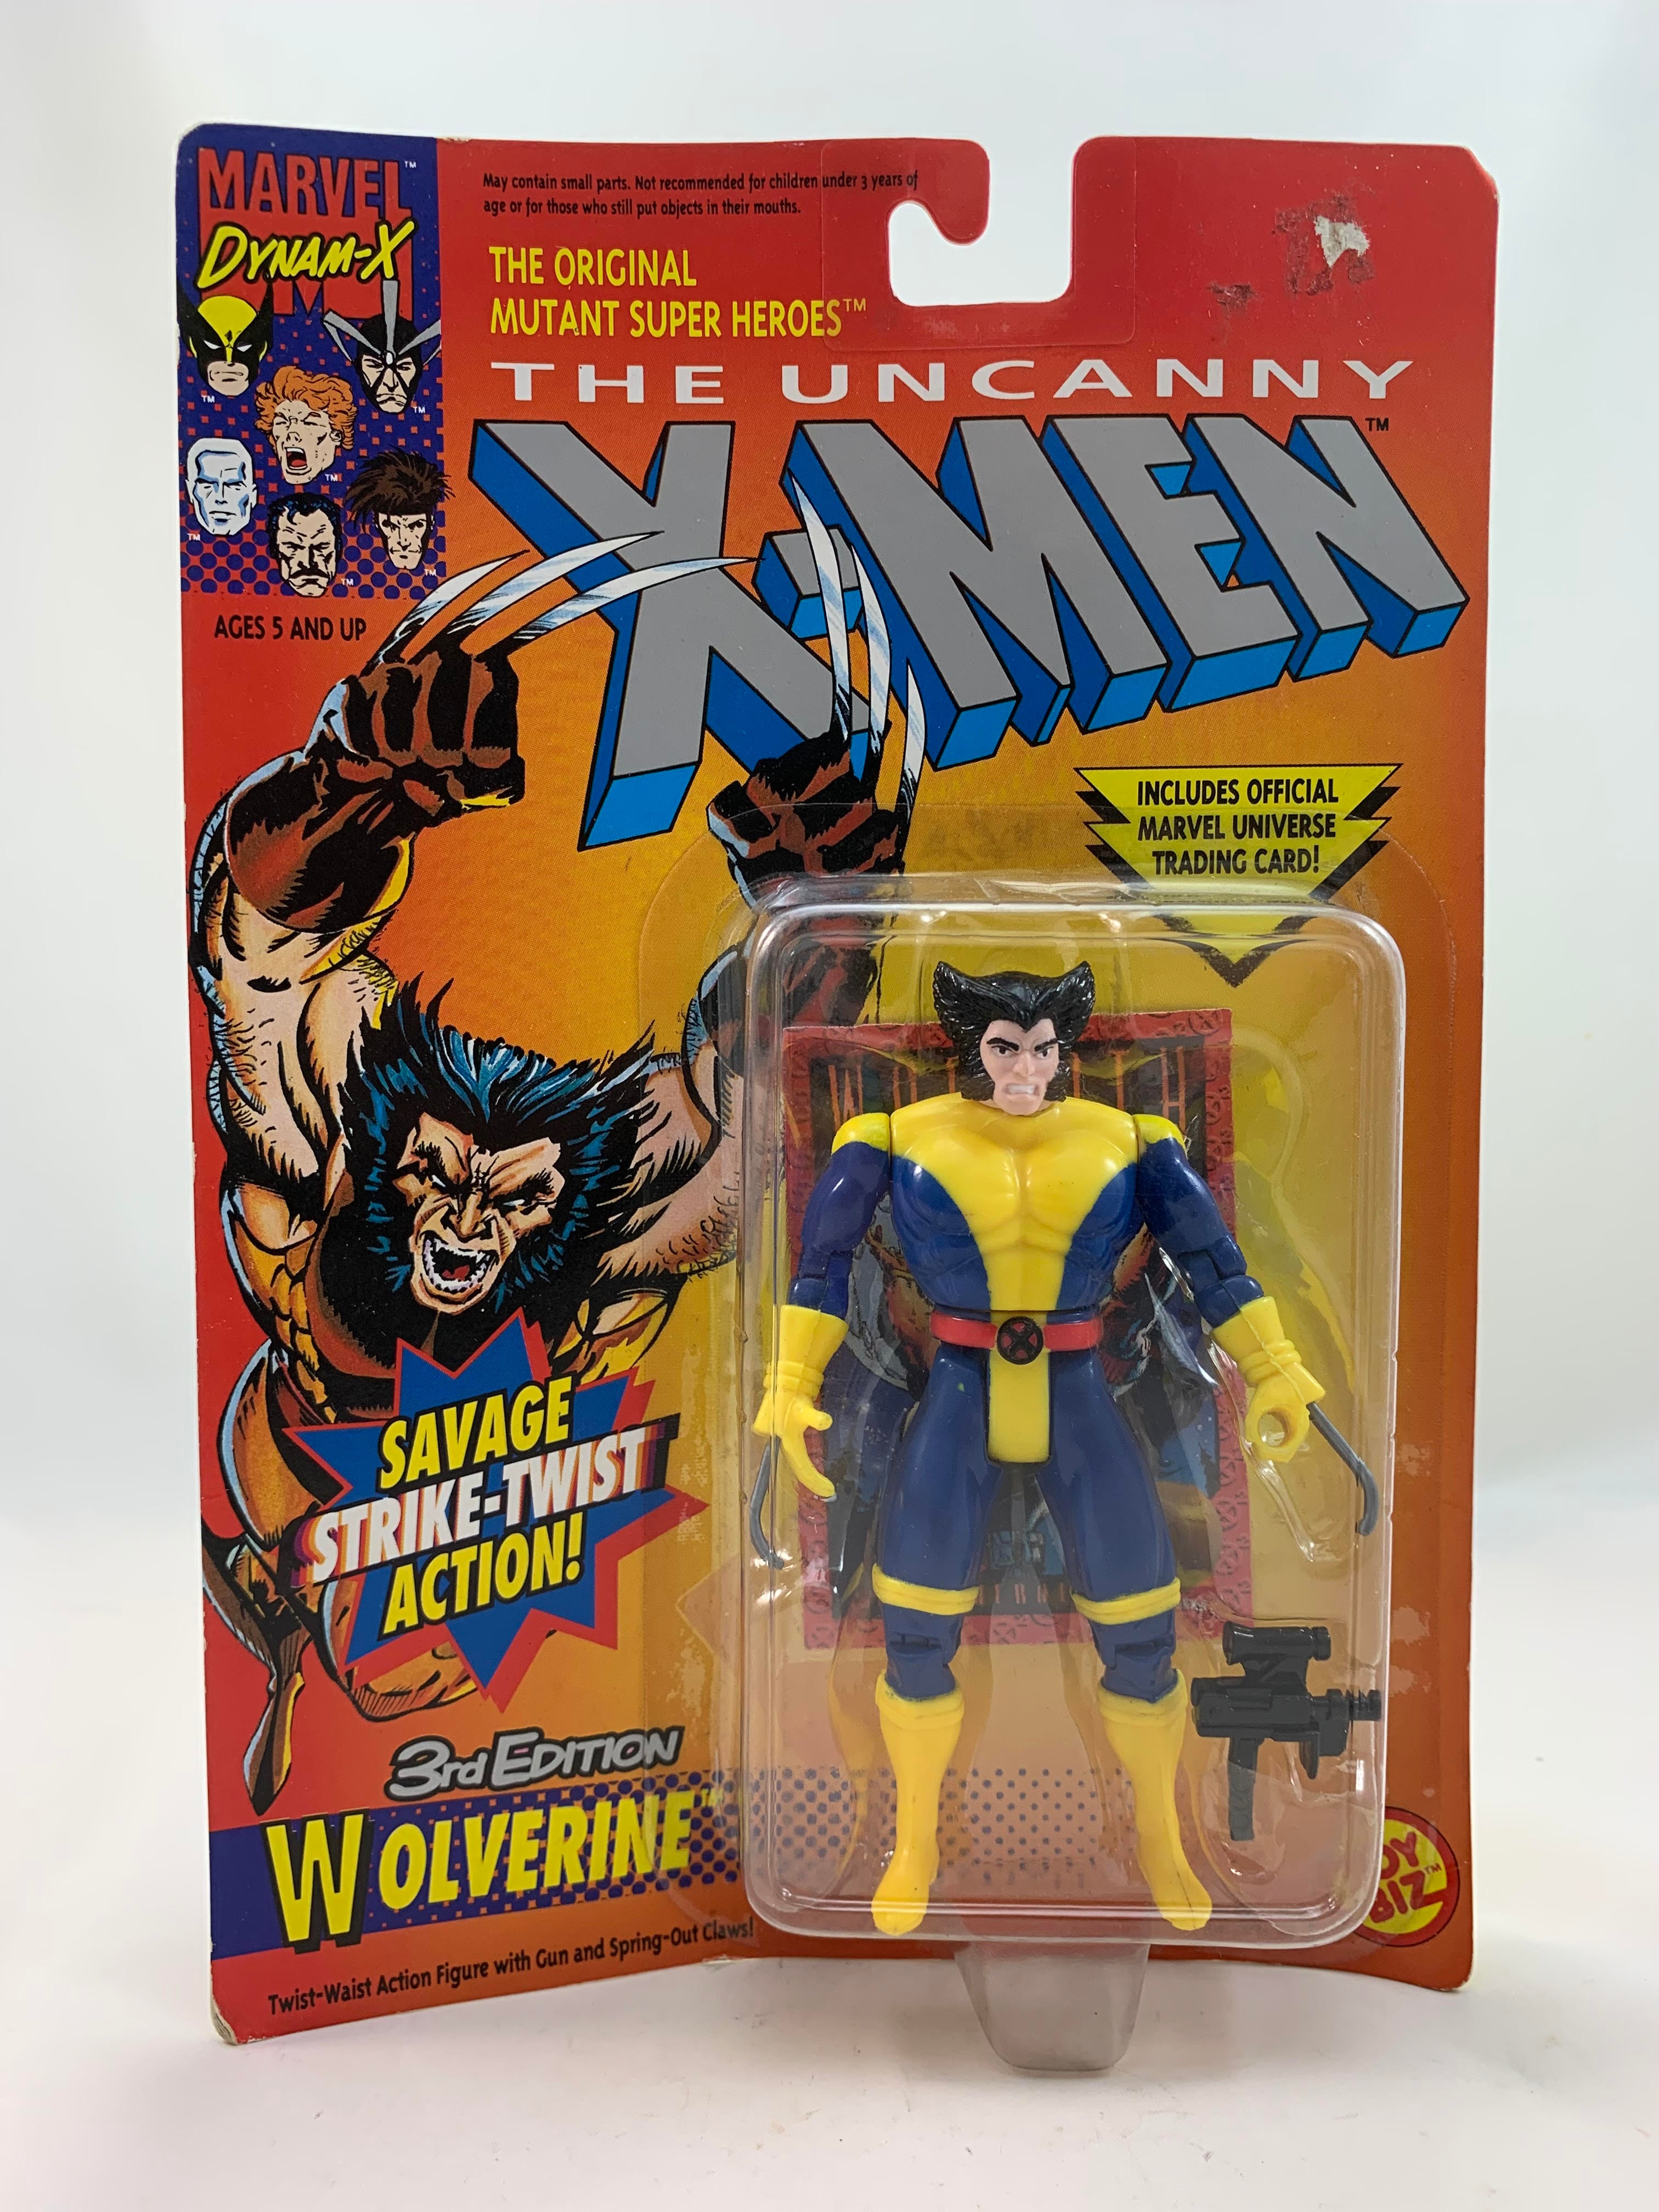 TOYBIZ Vintage Marvel XMEN THE UNCANNY WOLVERINE 3RD EDITION 1991